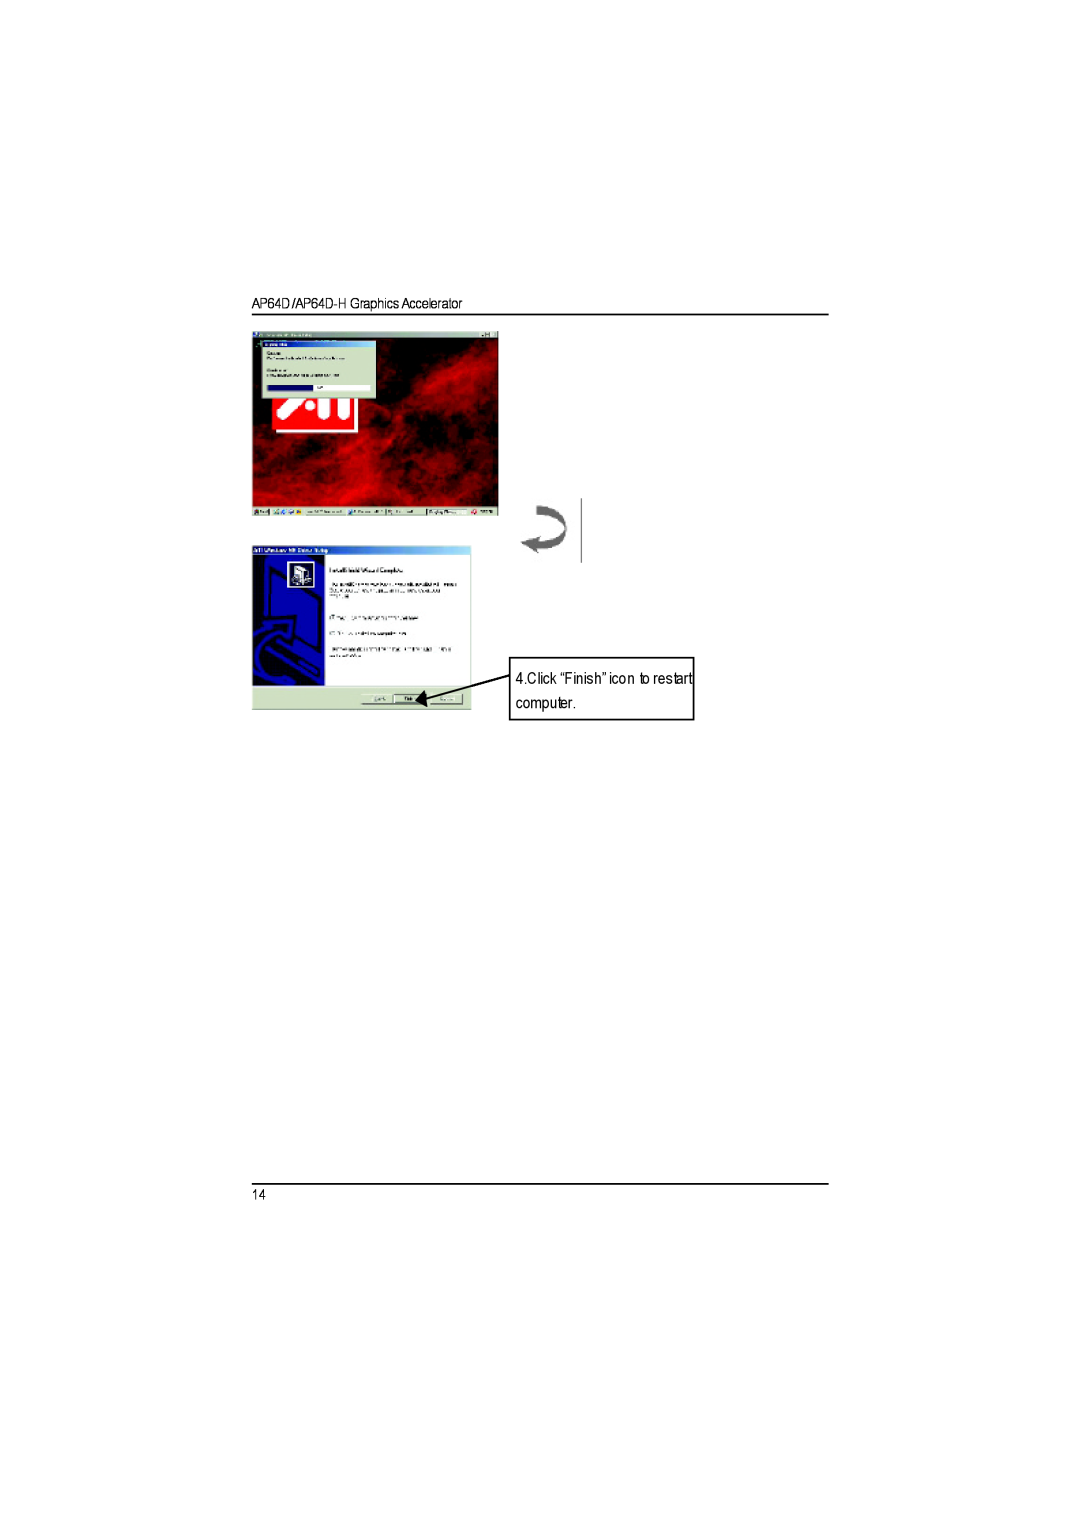 Gigabyte user manual Click “Finish”icon to restart computer, AP64D /AP64D-H Graphics Accelerator 